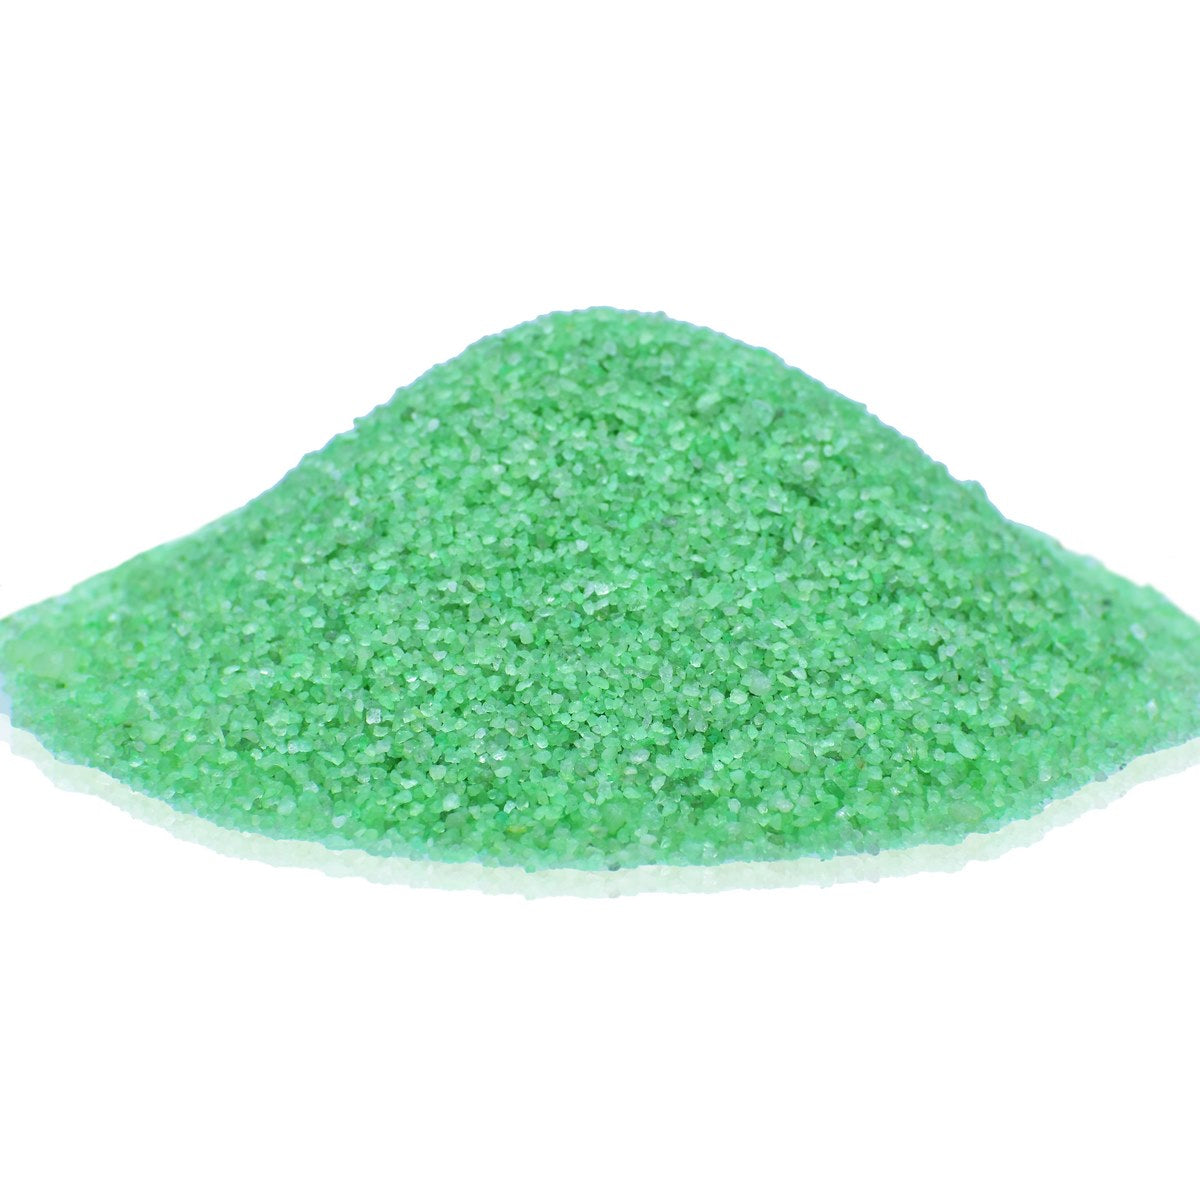 jags-mumbai Sand Jags Coloured Sugar Sand 150Gms L.Green